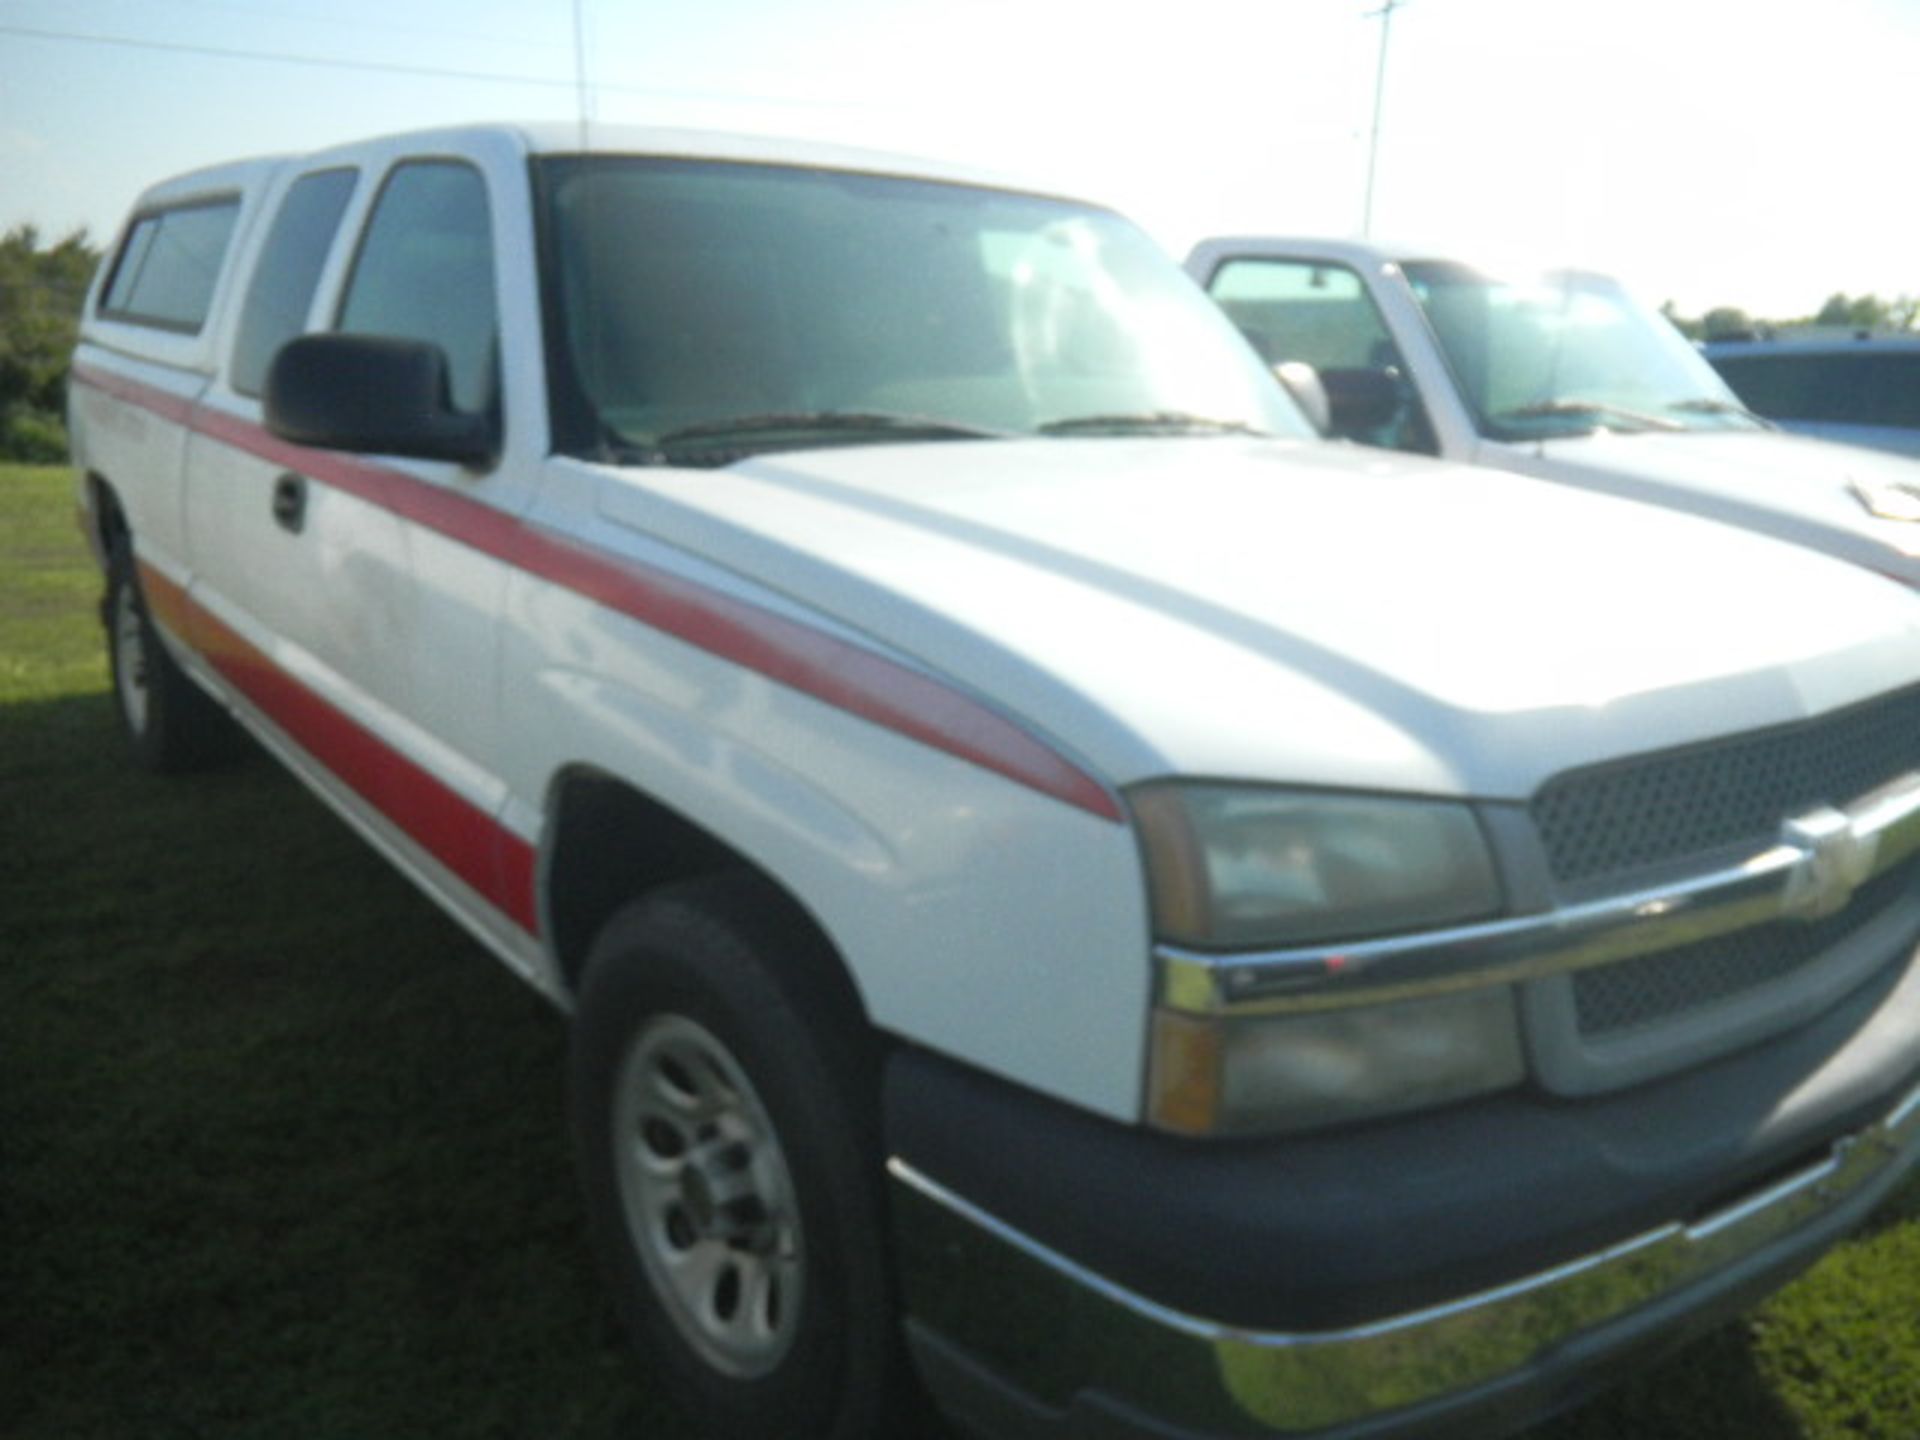 2005 Chevrolet 1500 Silverado Pickup Truck with Camper - Asset I.D. #153 - Last of Vin (243253) - Image 2 of 8